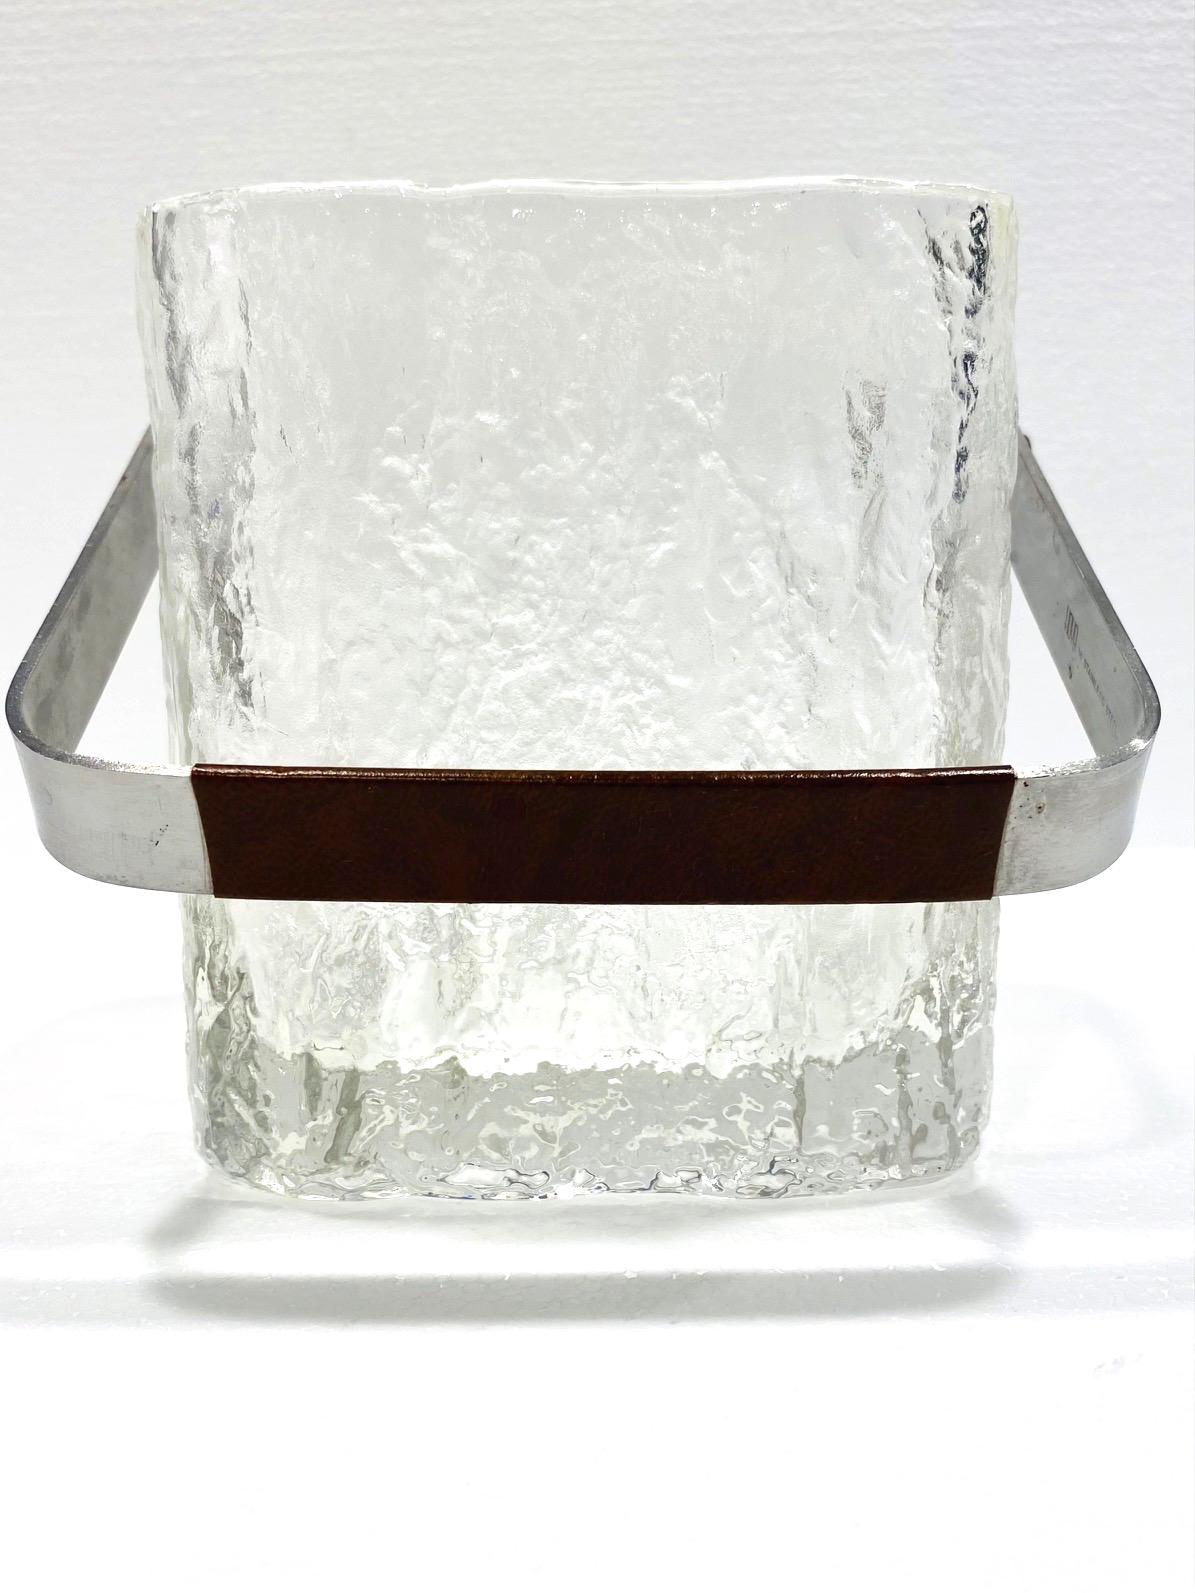 Japanese Mid-Century Modern Ice Bucket with Textured Ice Glass, Japan, circa 1960s